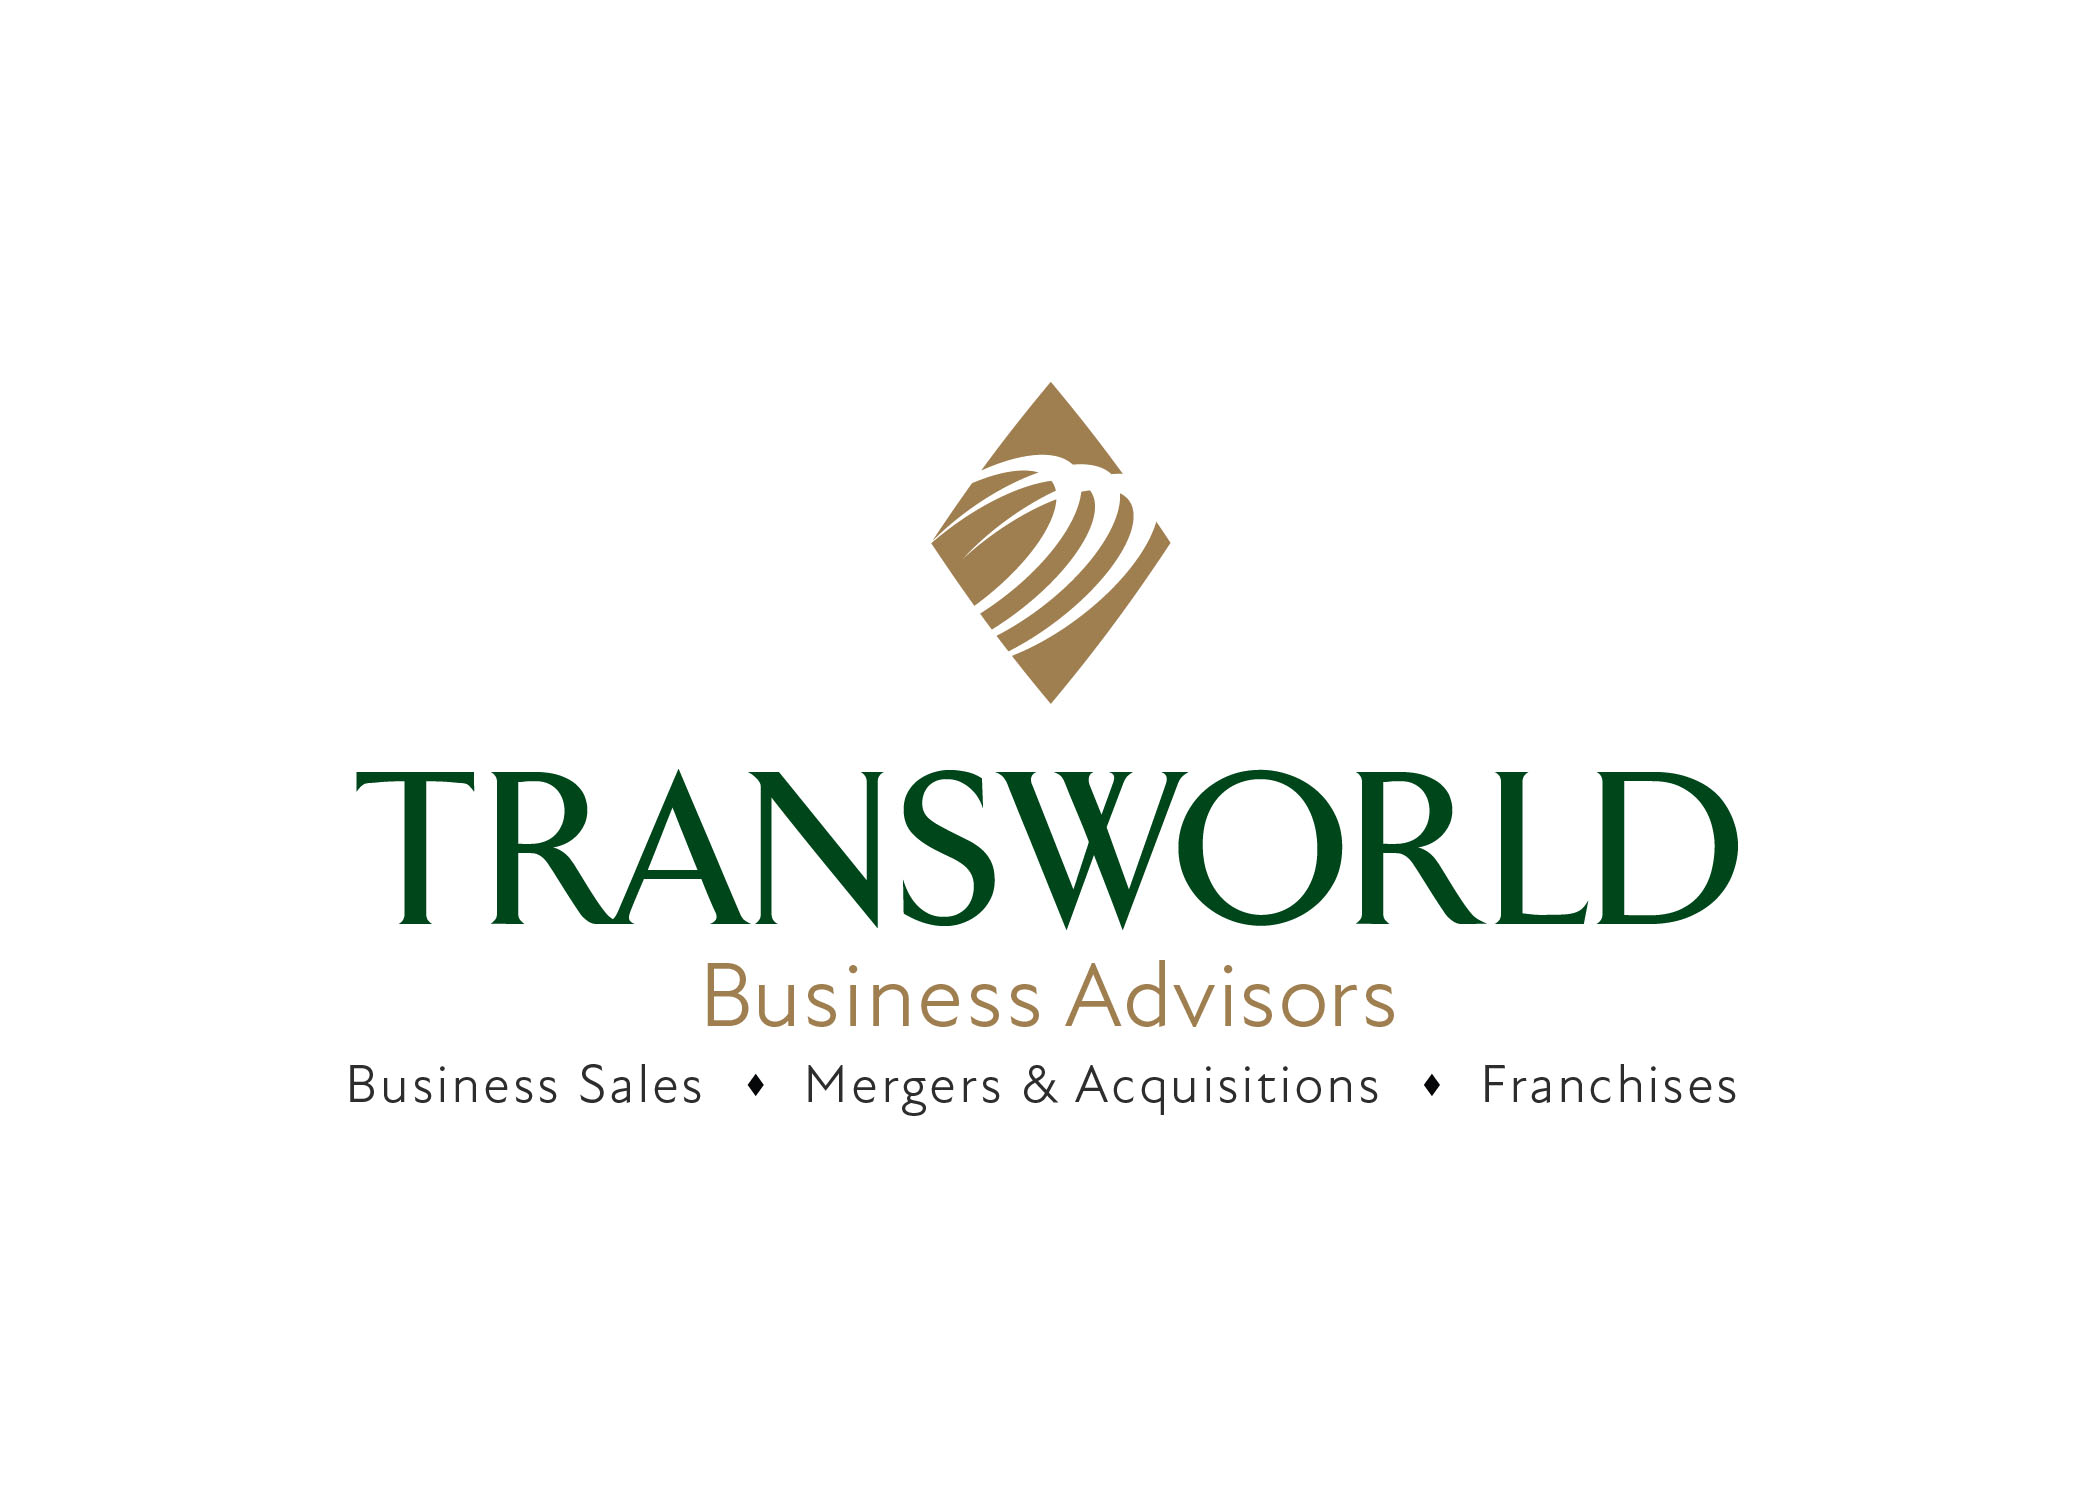 Jessica Starks, Transworld Business Advisors